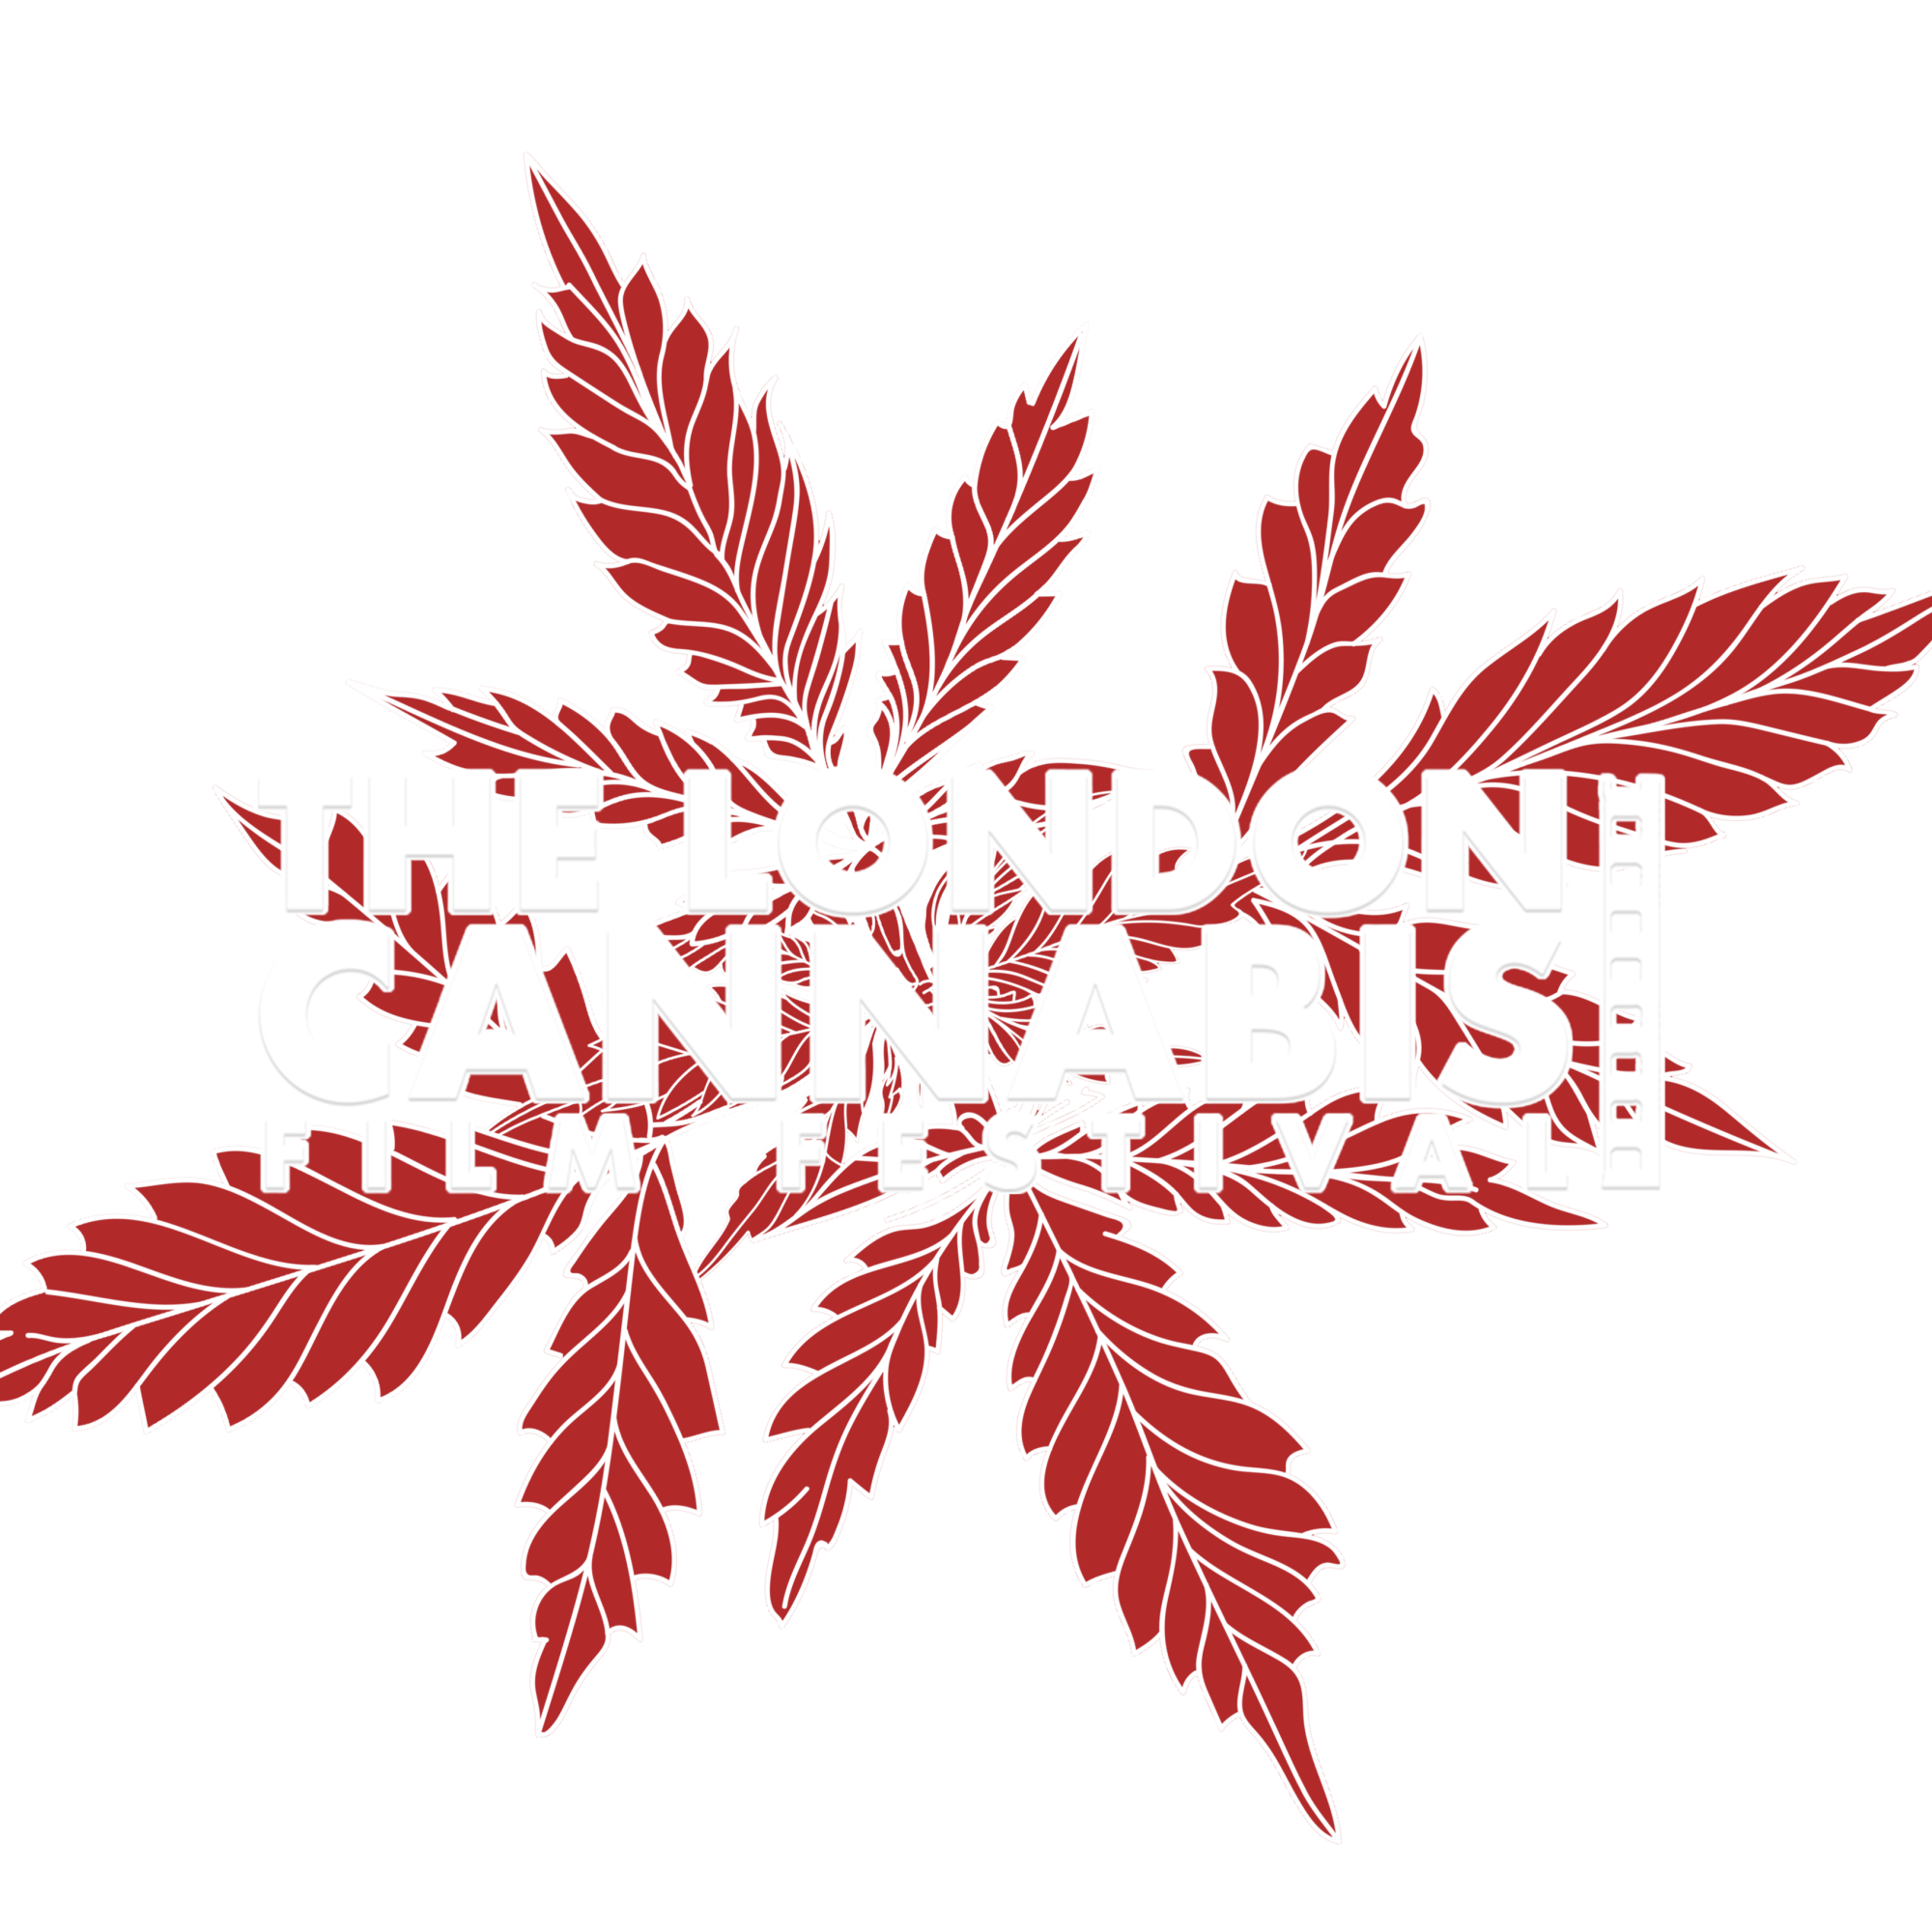 The London Cannabis Film Festival